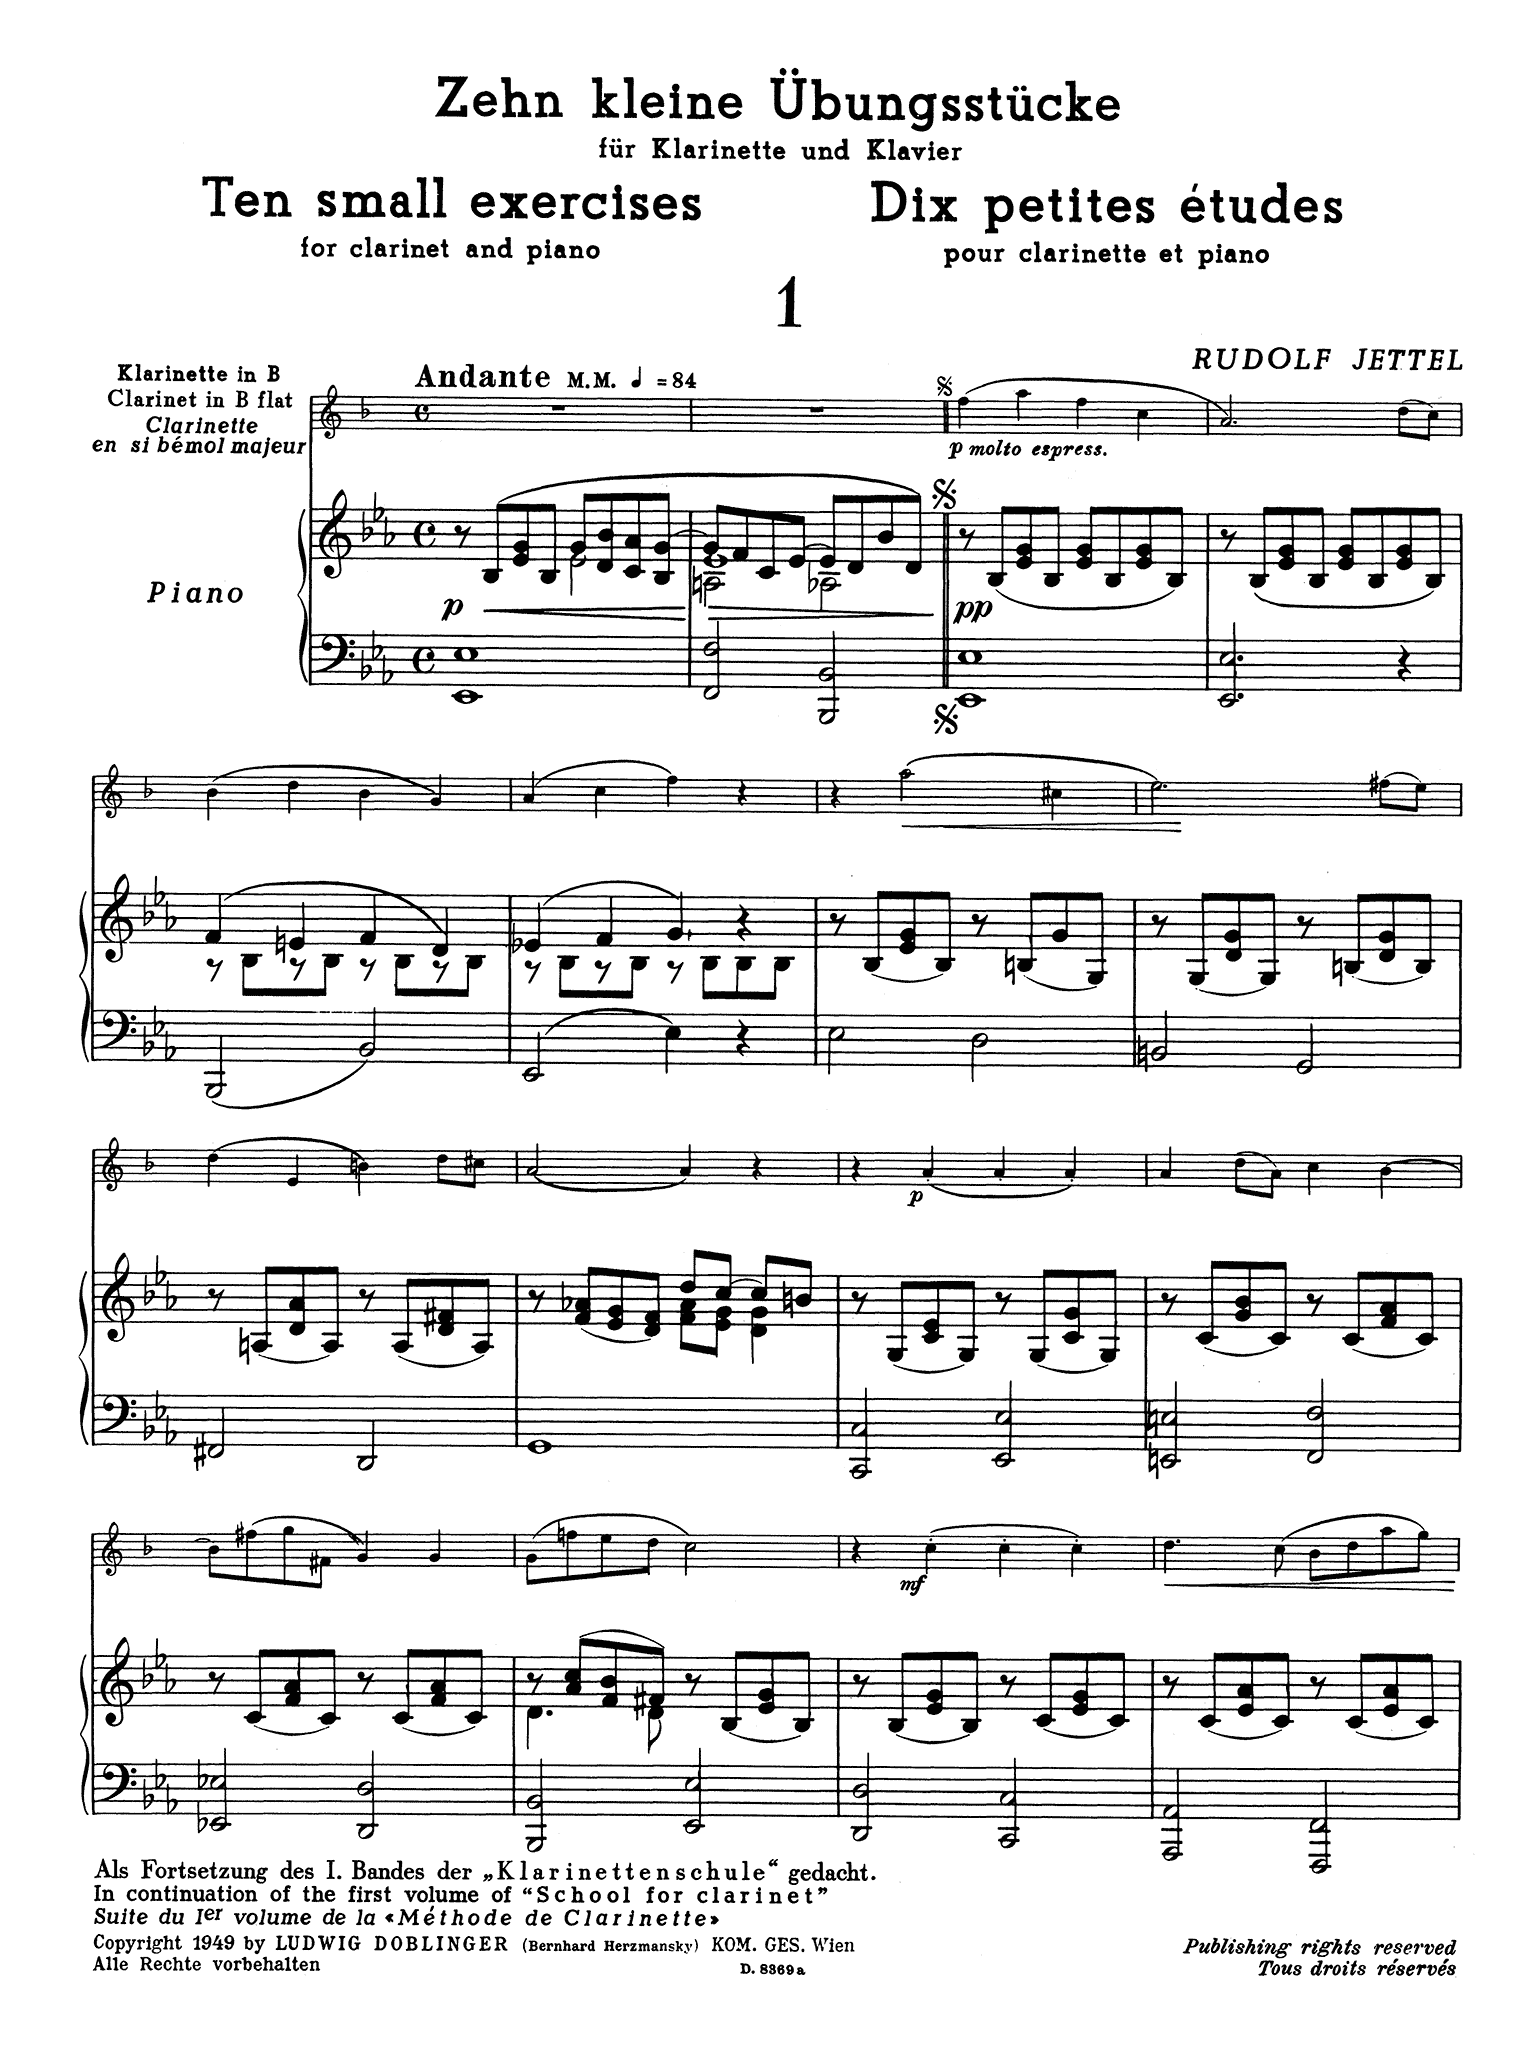 Jettel 10 Klein e Ubunsstuck clarinet piano score page 2